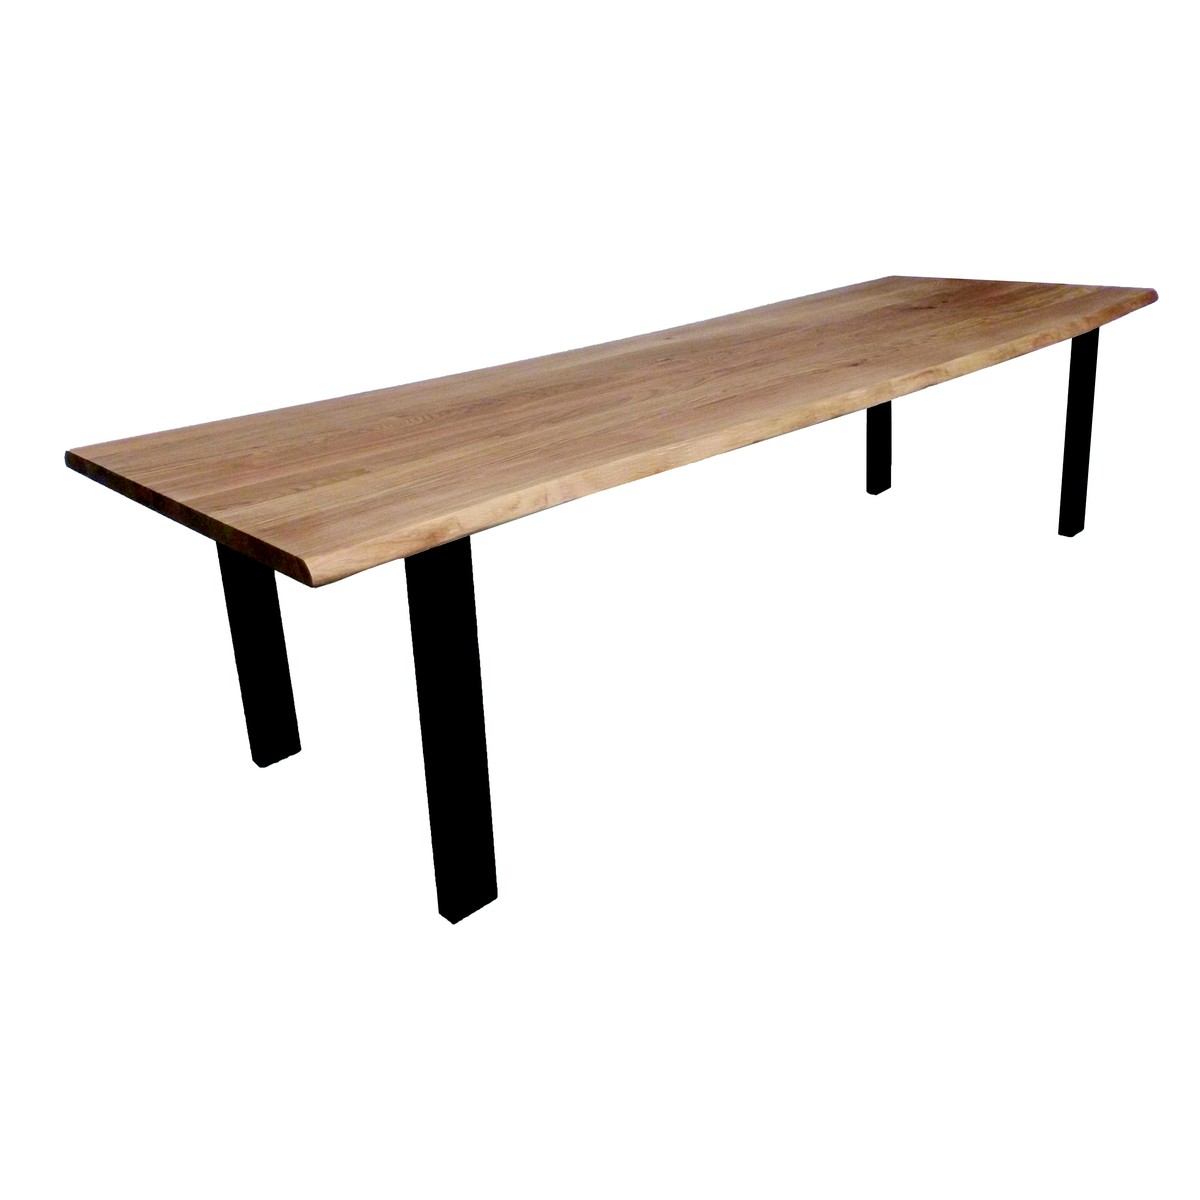   Table haute Eden Trunk rectangulaire  160x100x90cm